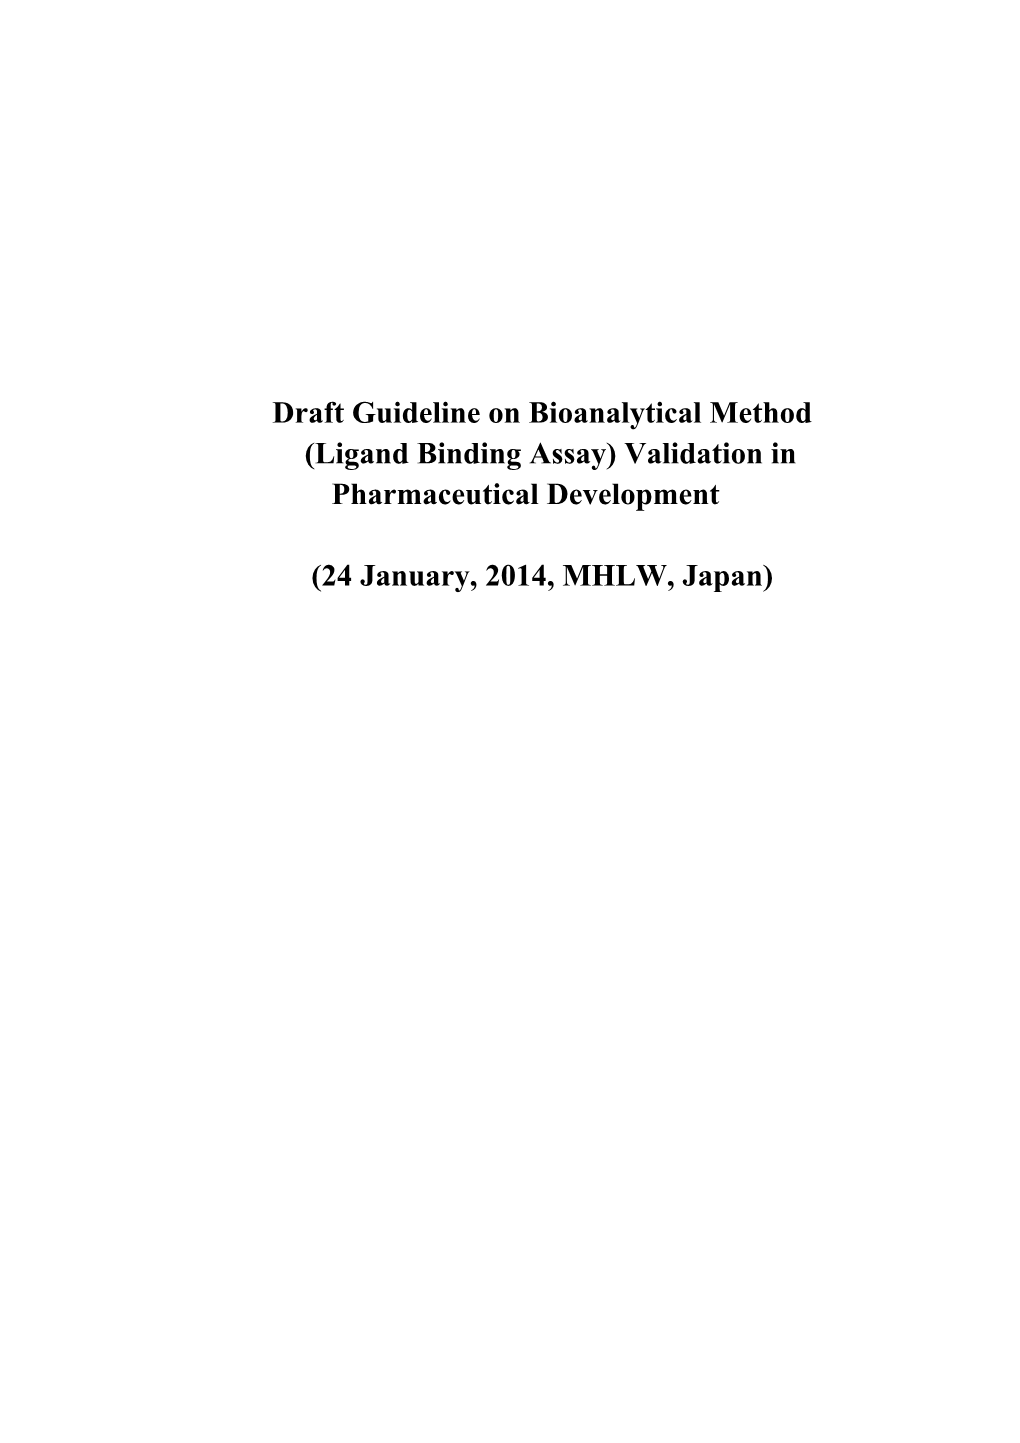 Draft Guideline on Bioanalytical Method (Ligand Binding Assay) Validation in Pharmaceutical Development